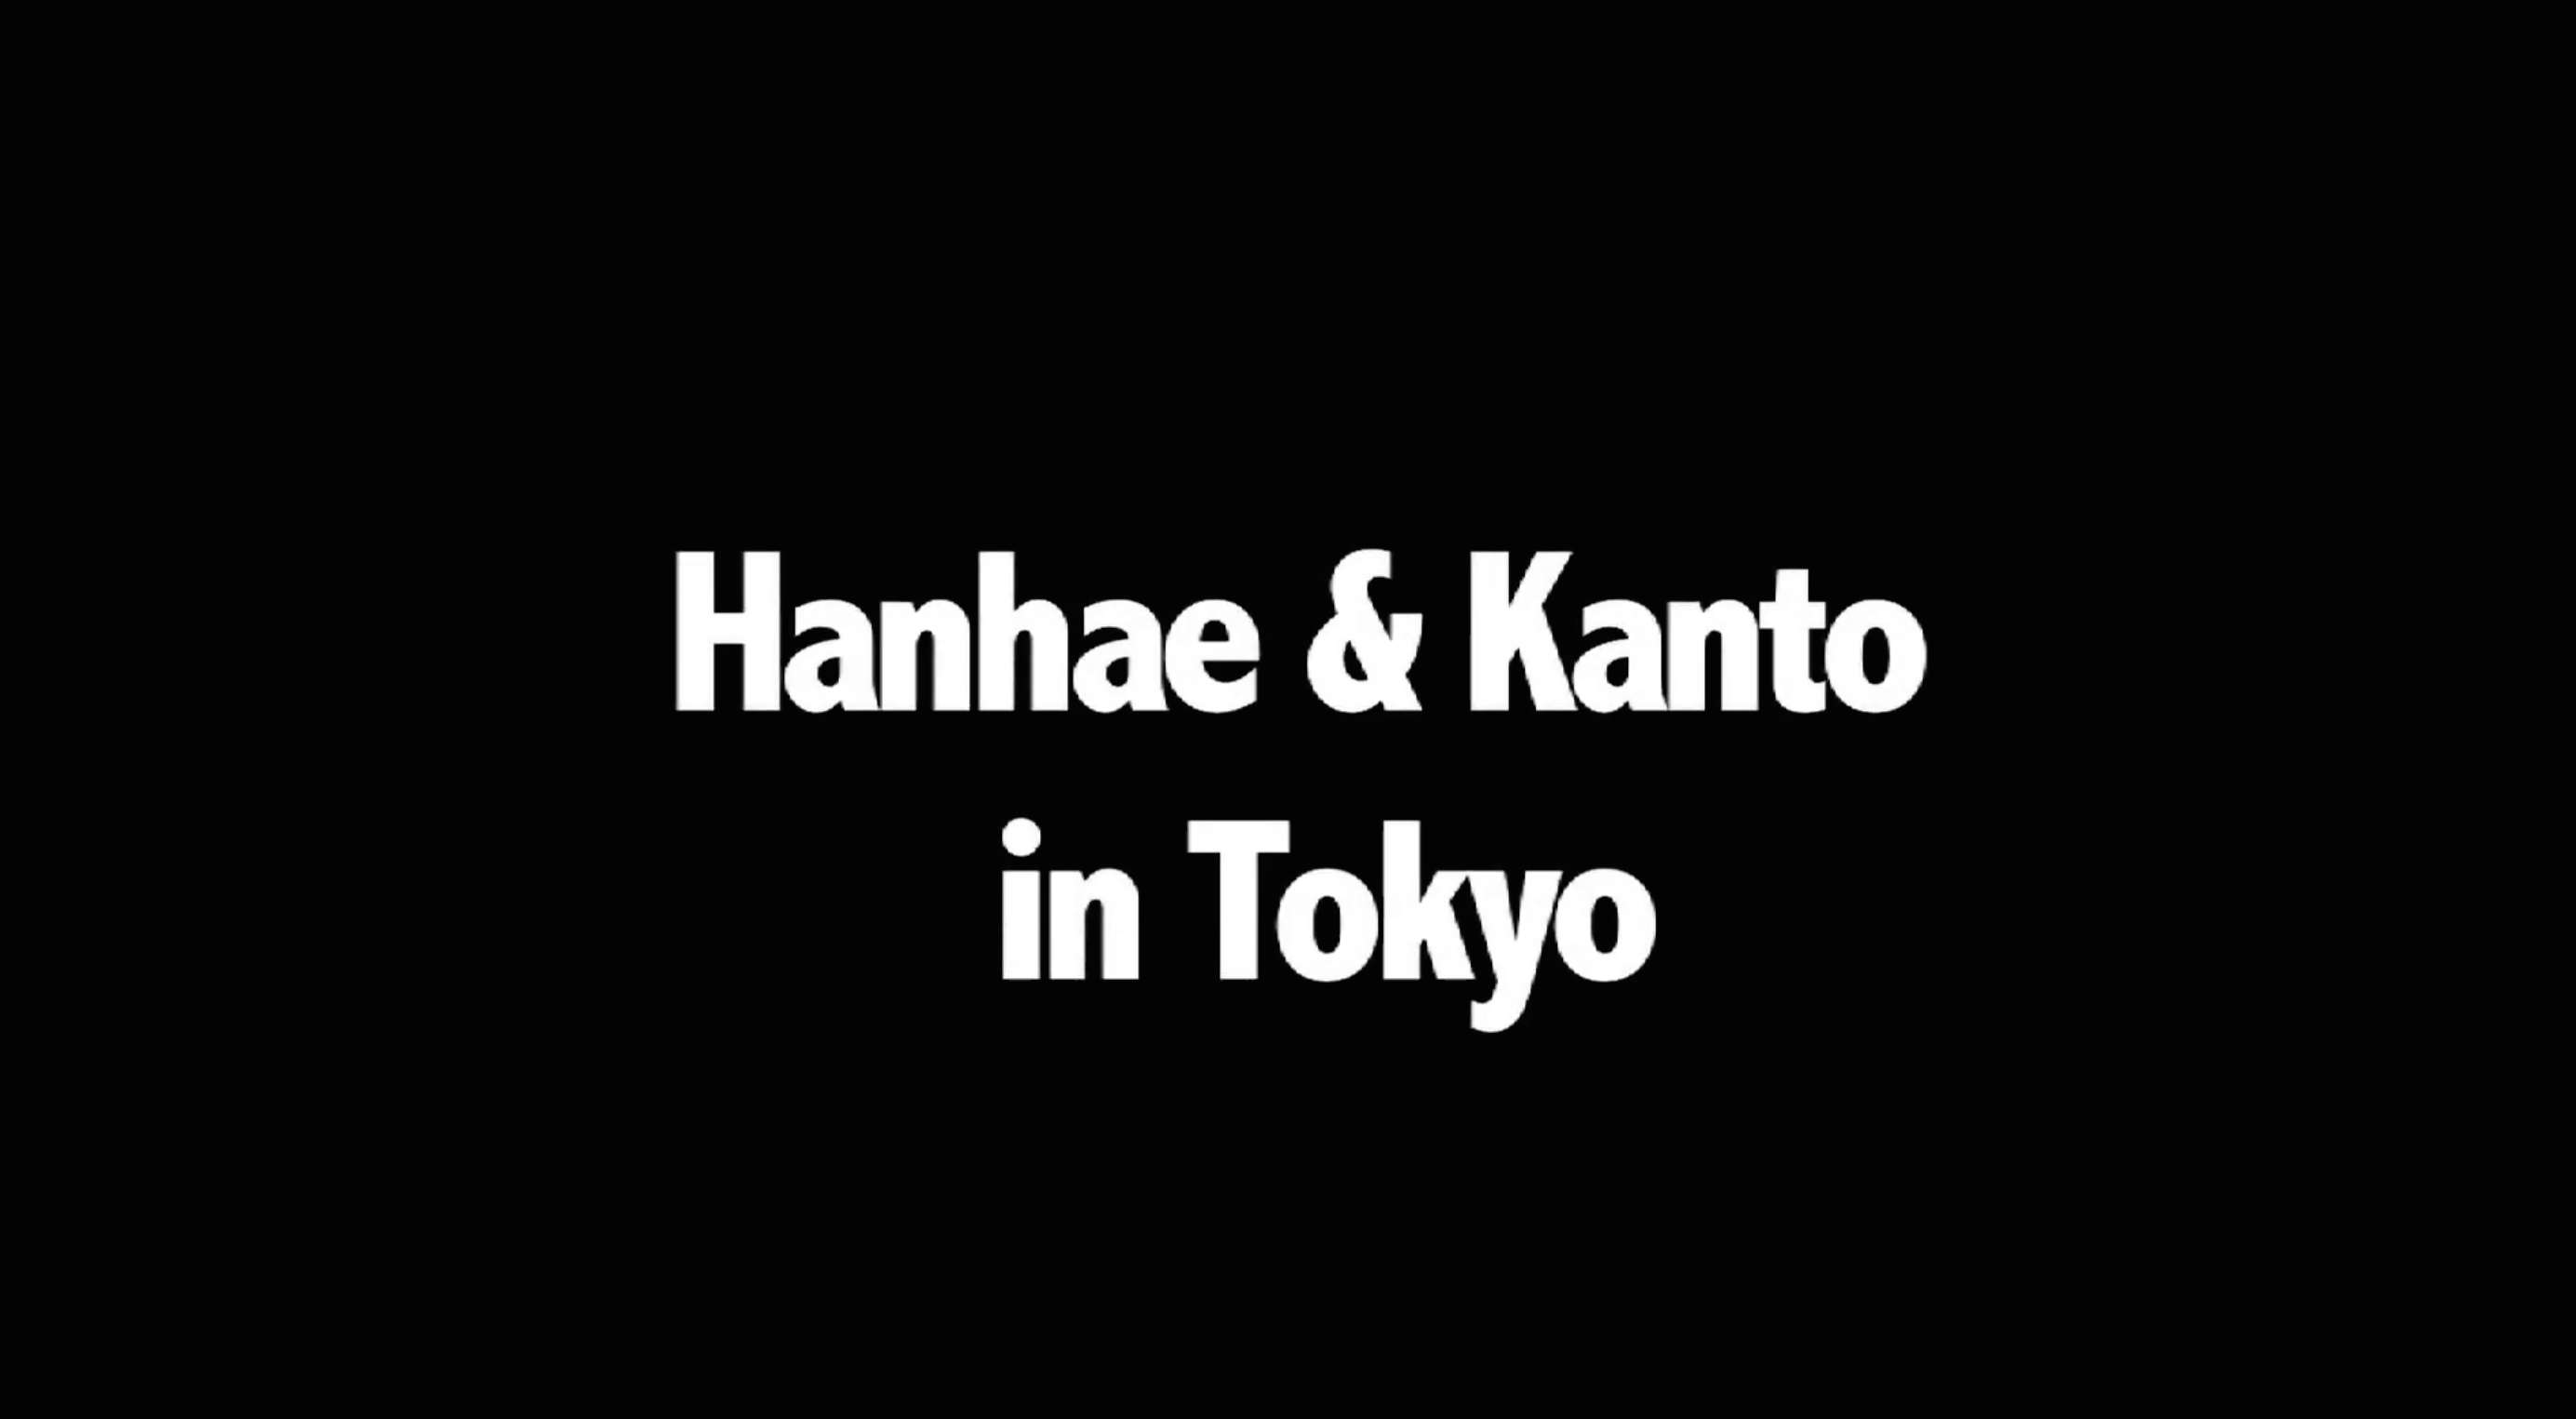 Hanhae & Kanto In Tokyo